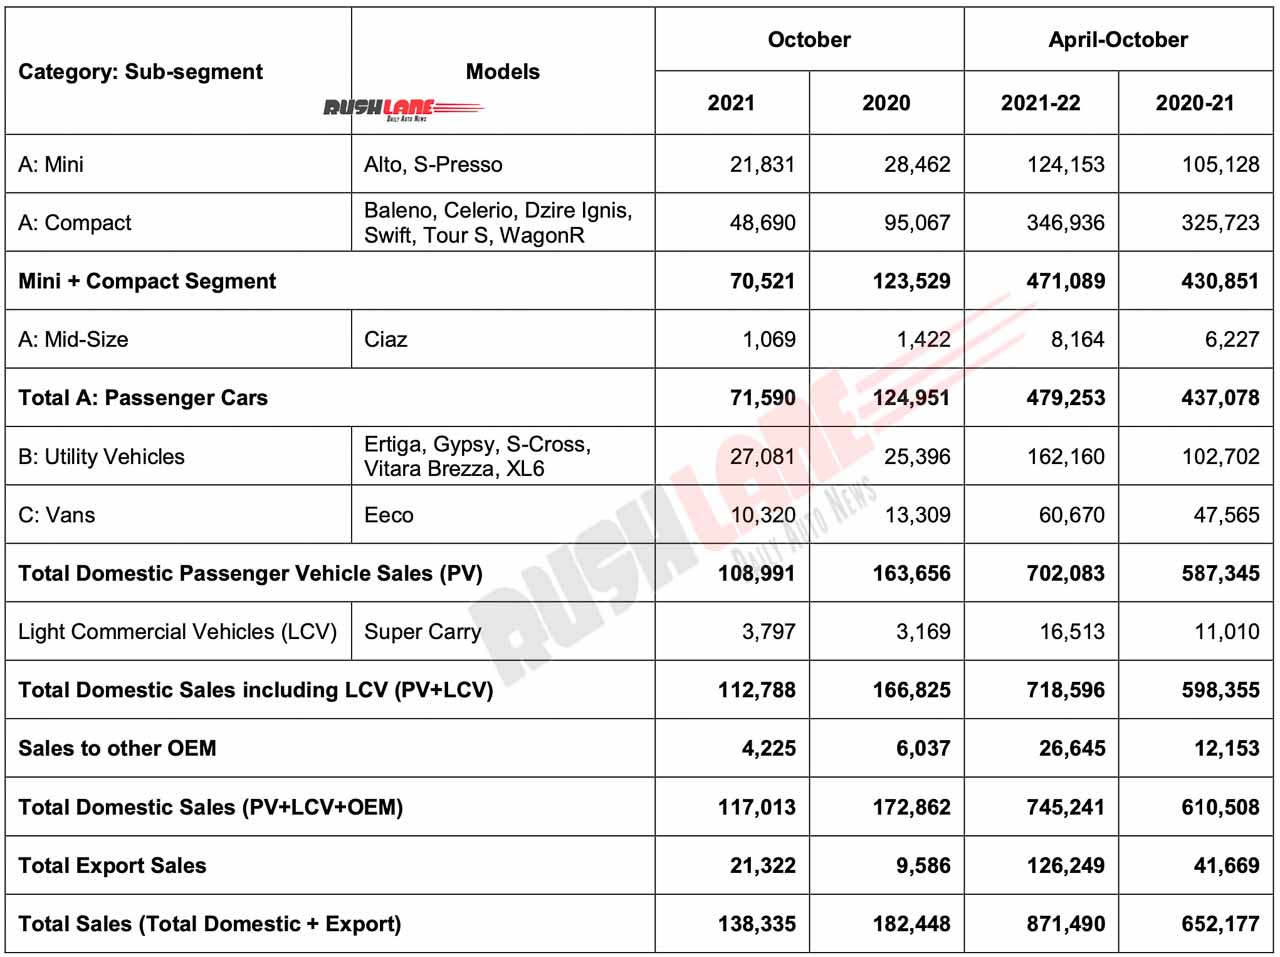 Maruti Car Sales Oct 2021